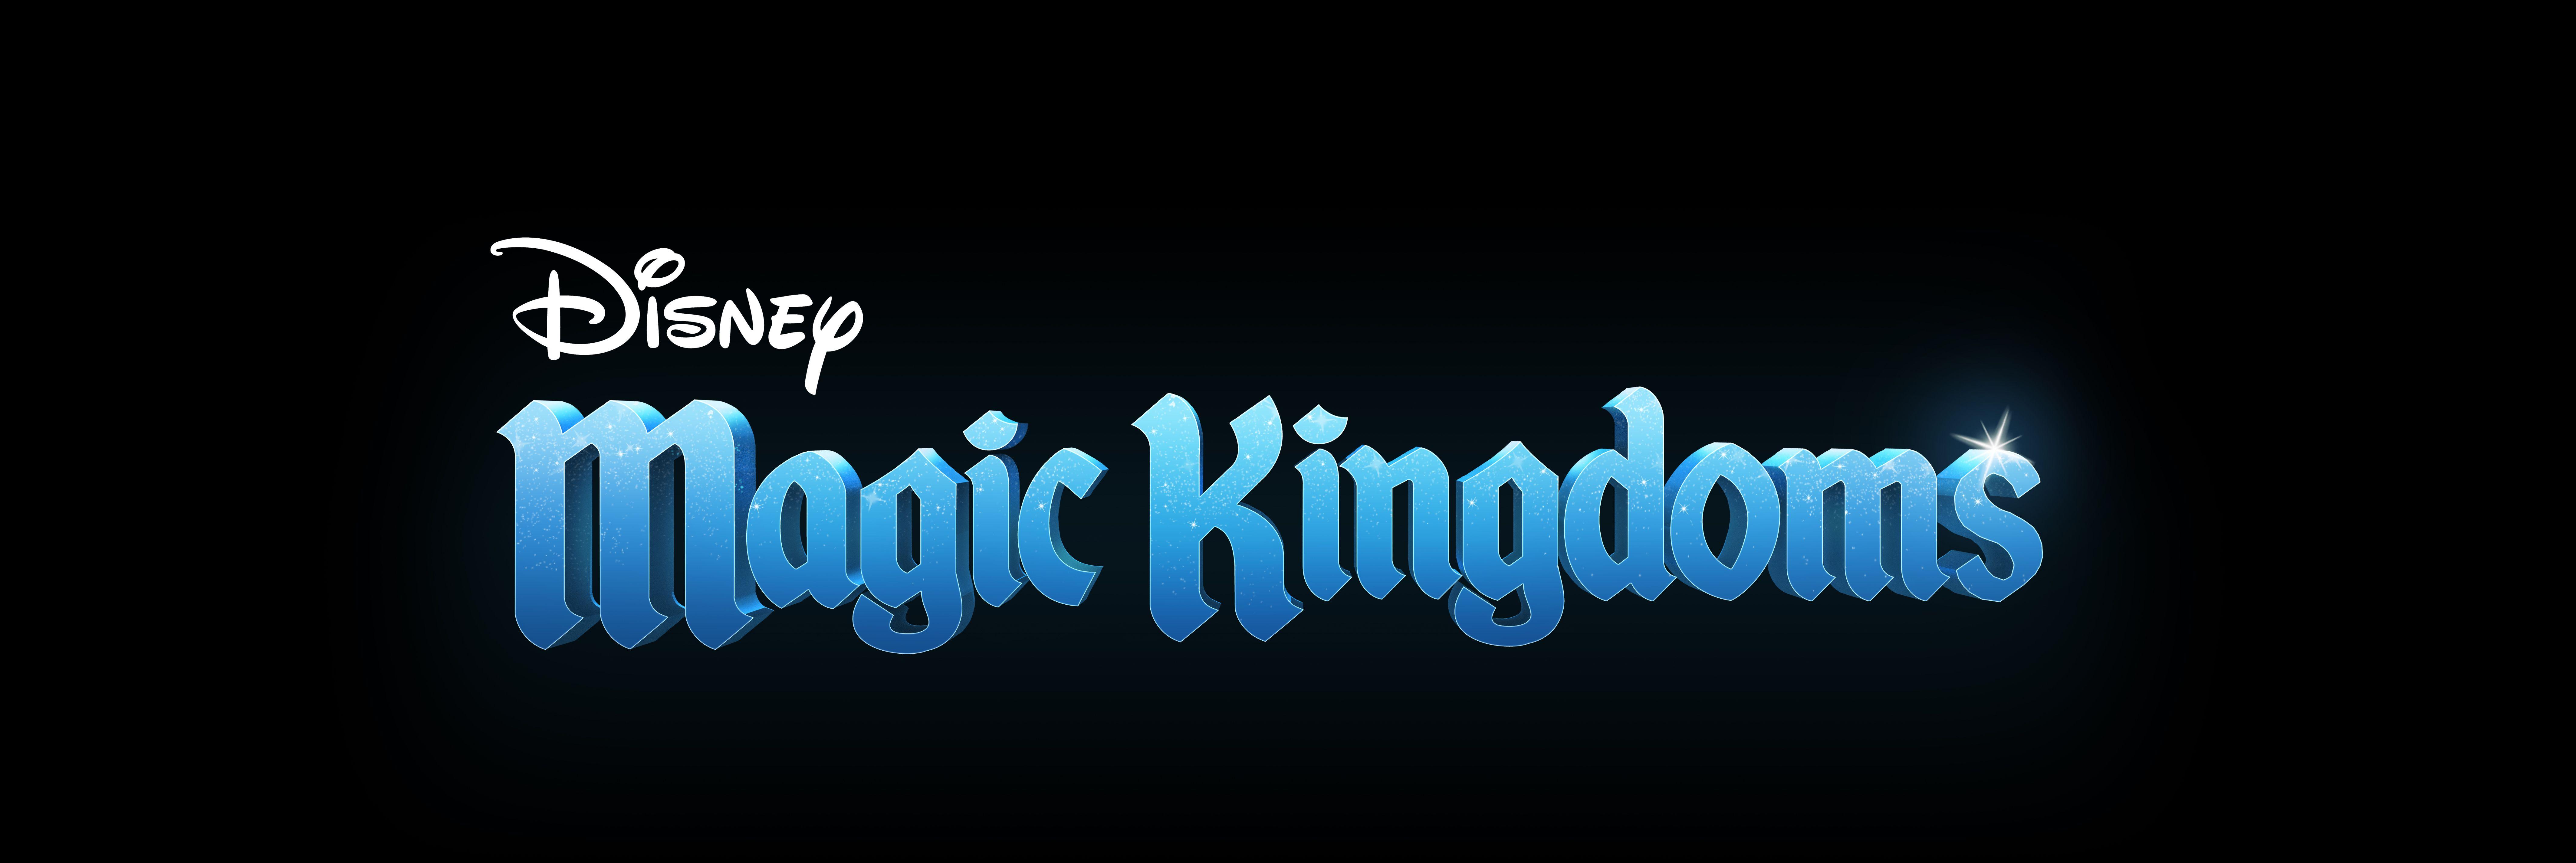 Disney Magic Kingdom Logo - Disney Magic Kingdoms Mobile Builder Game Revealed